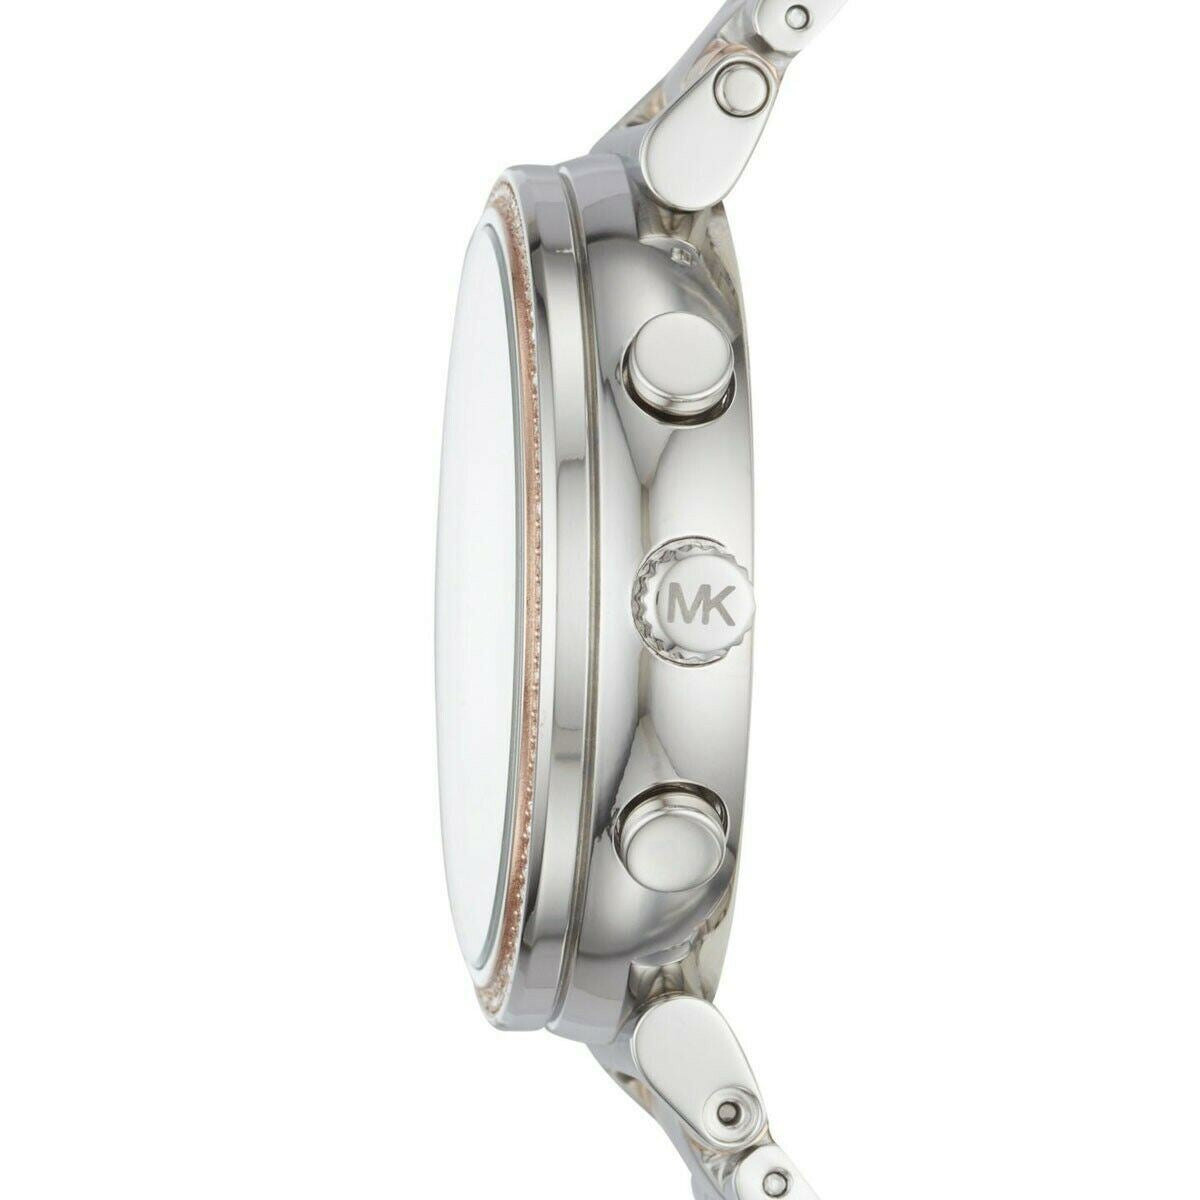 Michael Kors MK6558 Sofie Chronograph Crystal Silver Dial Ladies Watch